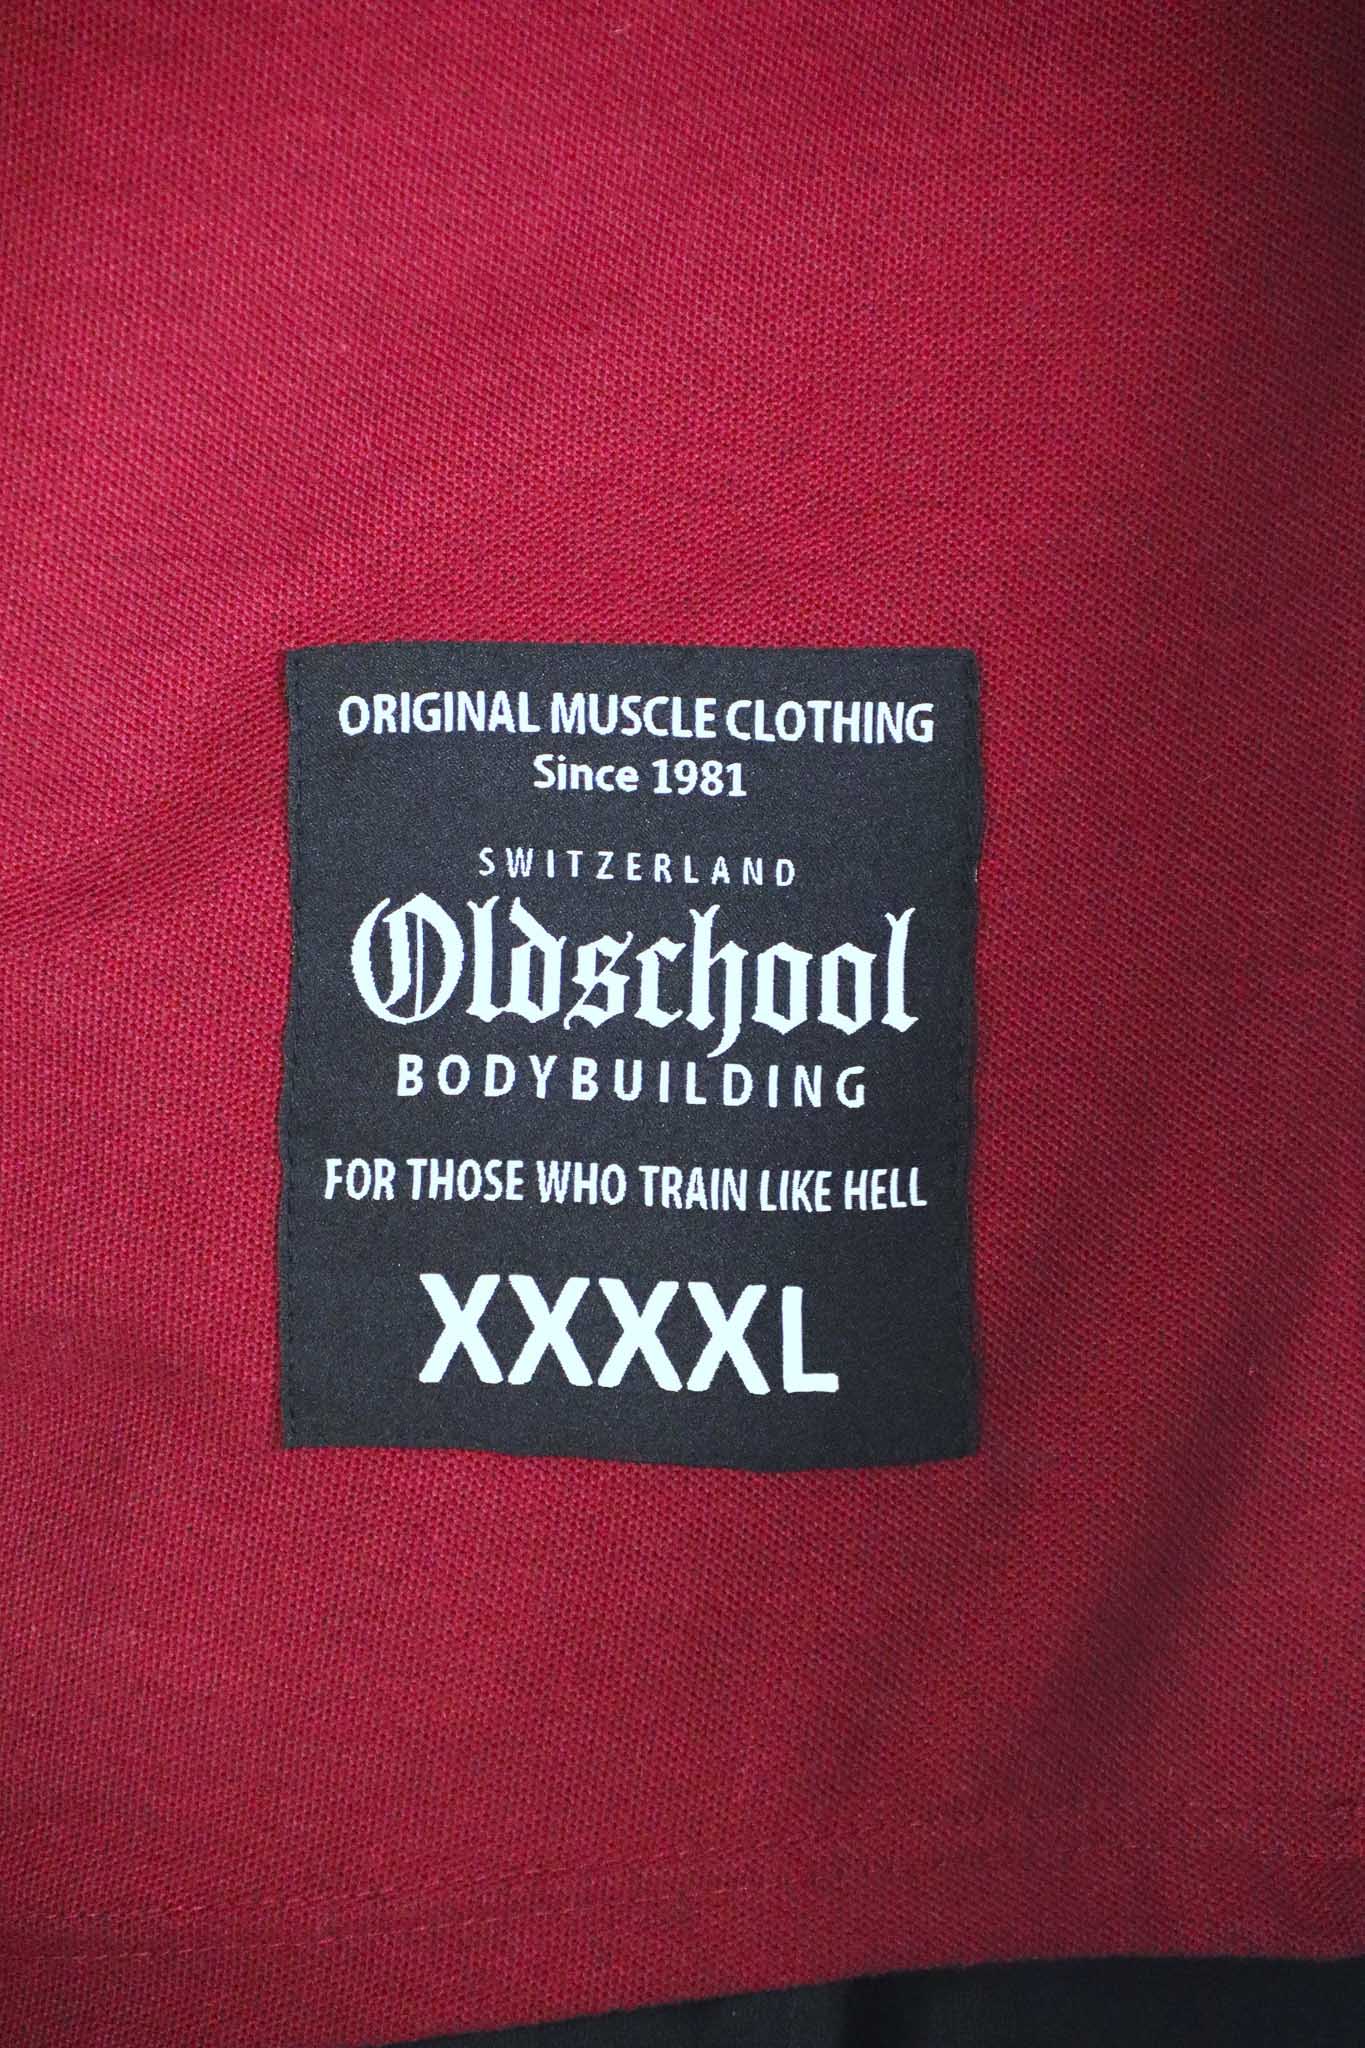 Oldschool Bodybuilding Switzerland  XXXXL Limited Edition Shirt - Bordeaux/Gold